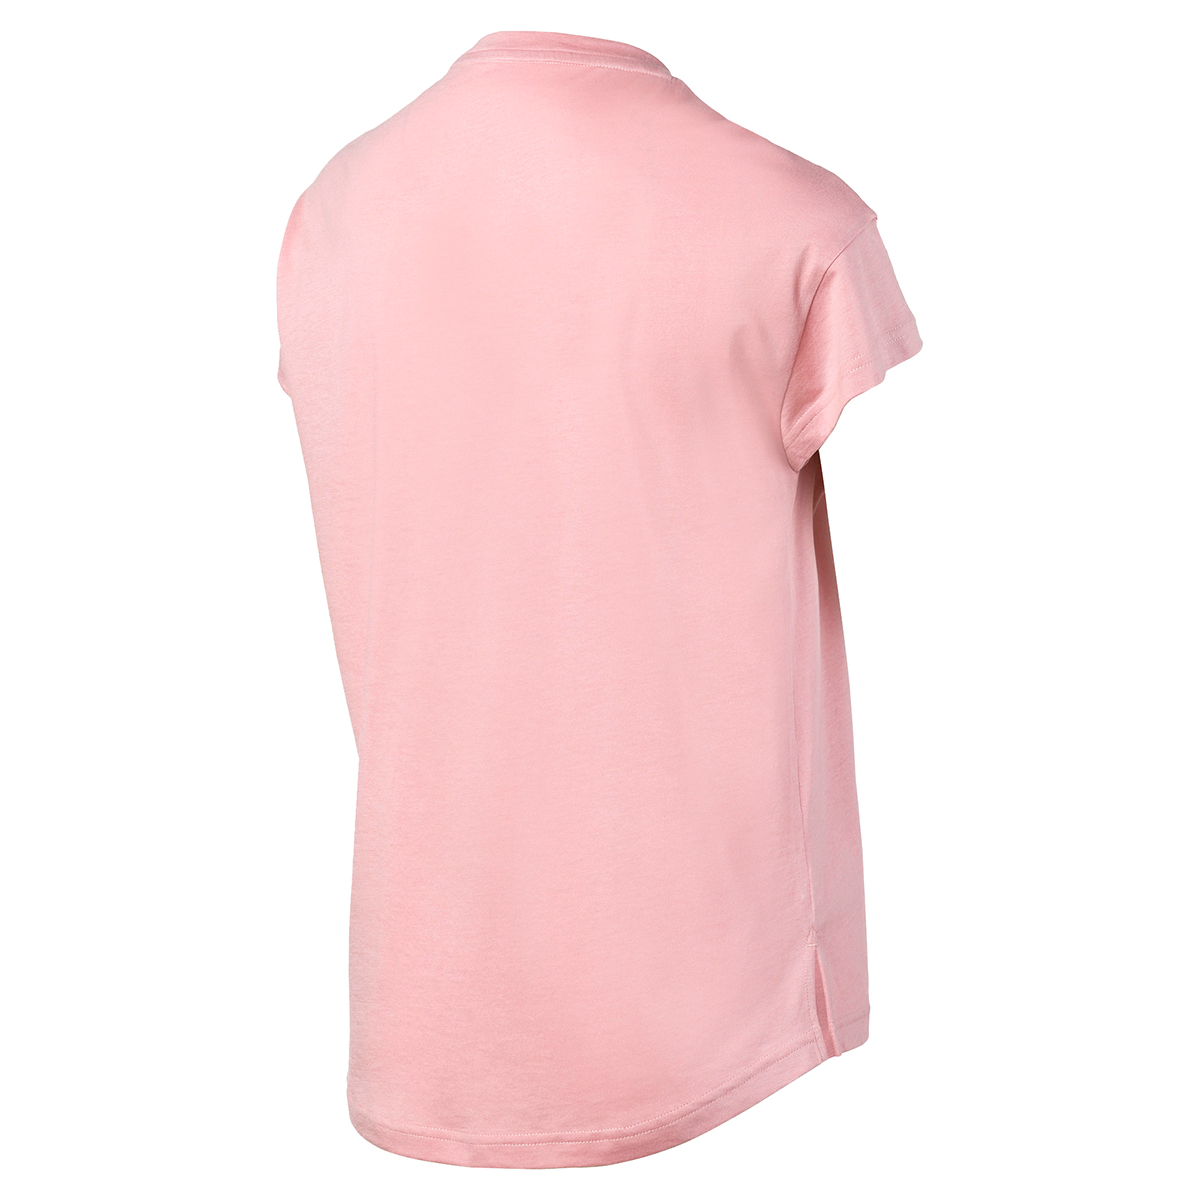 PUMA Damen Modern Sports Graphic Tee DryCell T-Shirt pink 580075 14